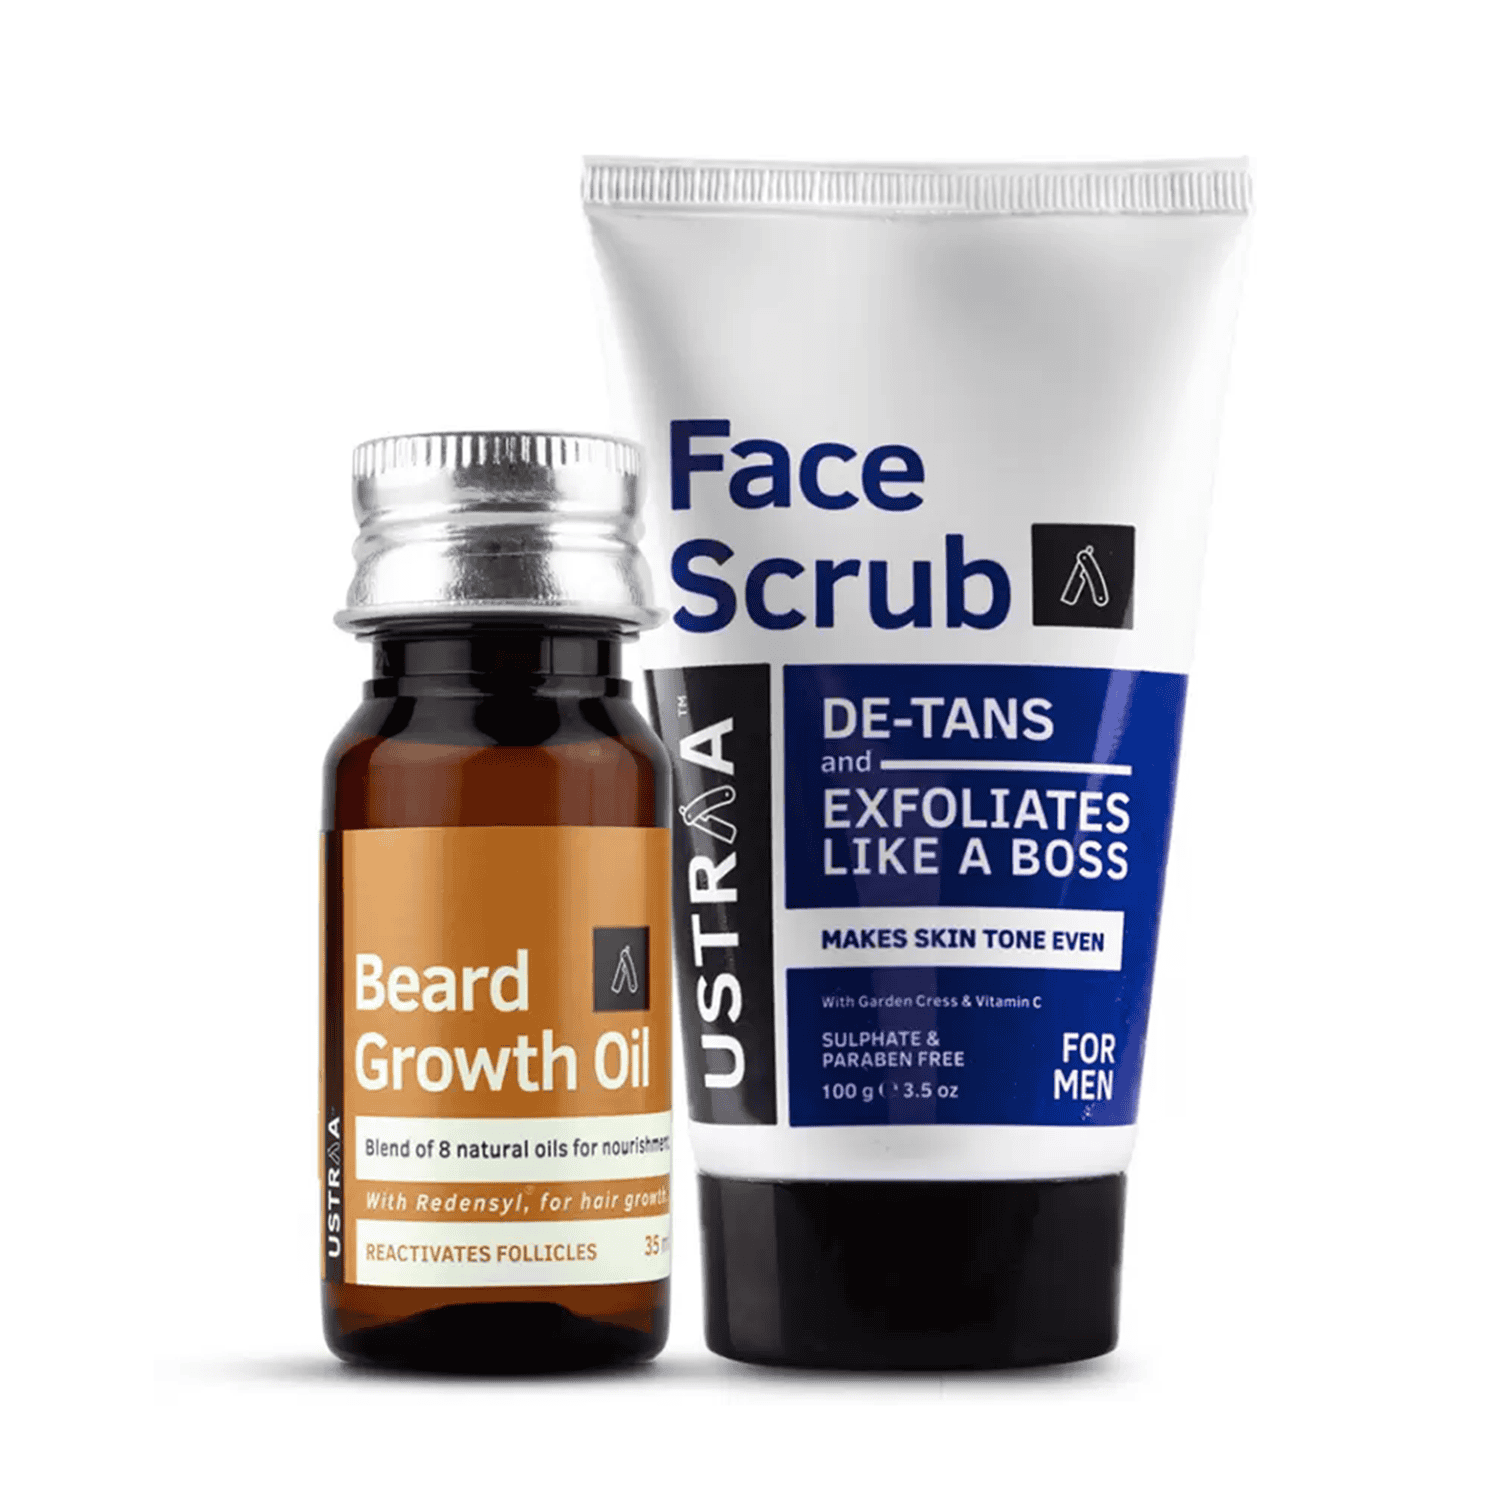 Ustraa Beard Growth Oil & De-tan Face Scrub